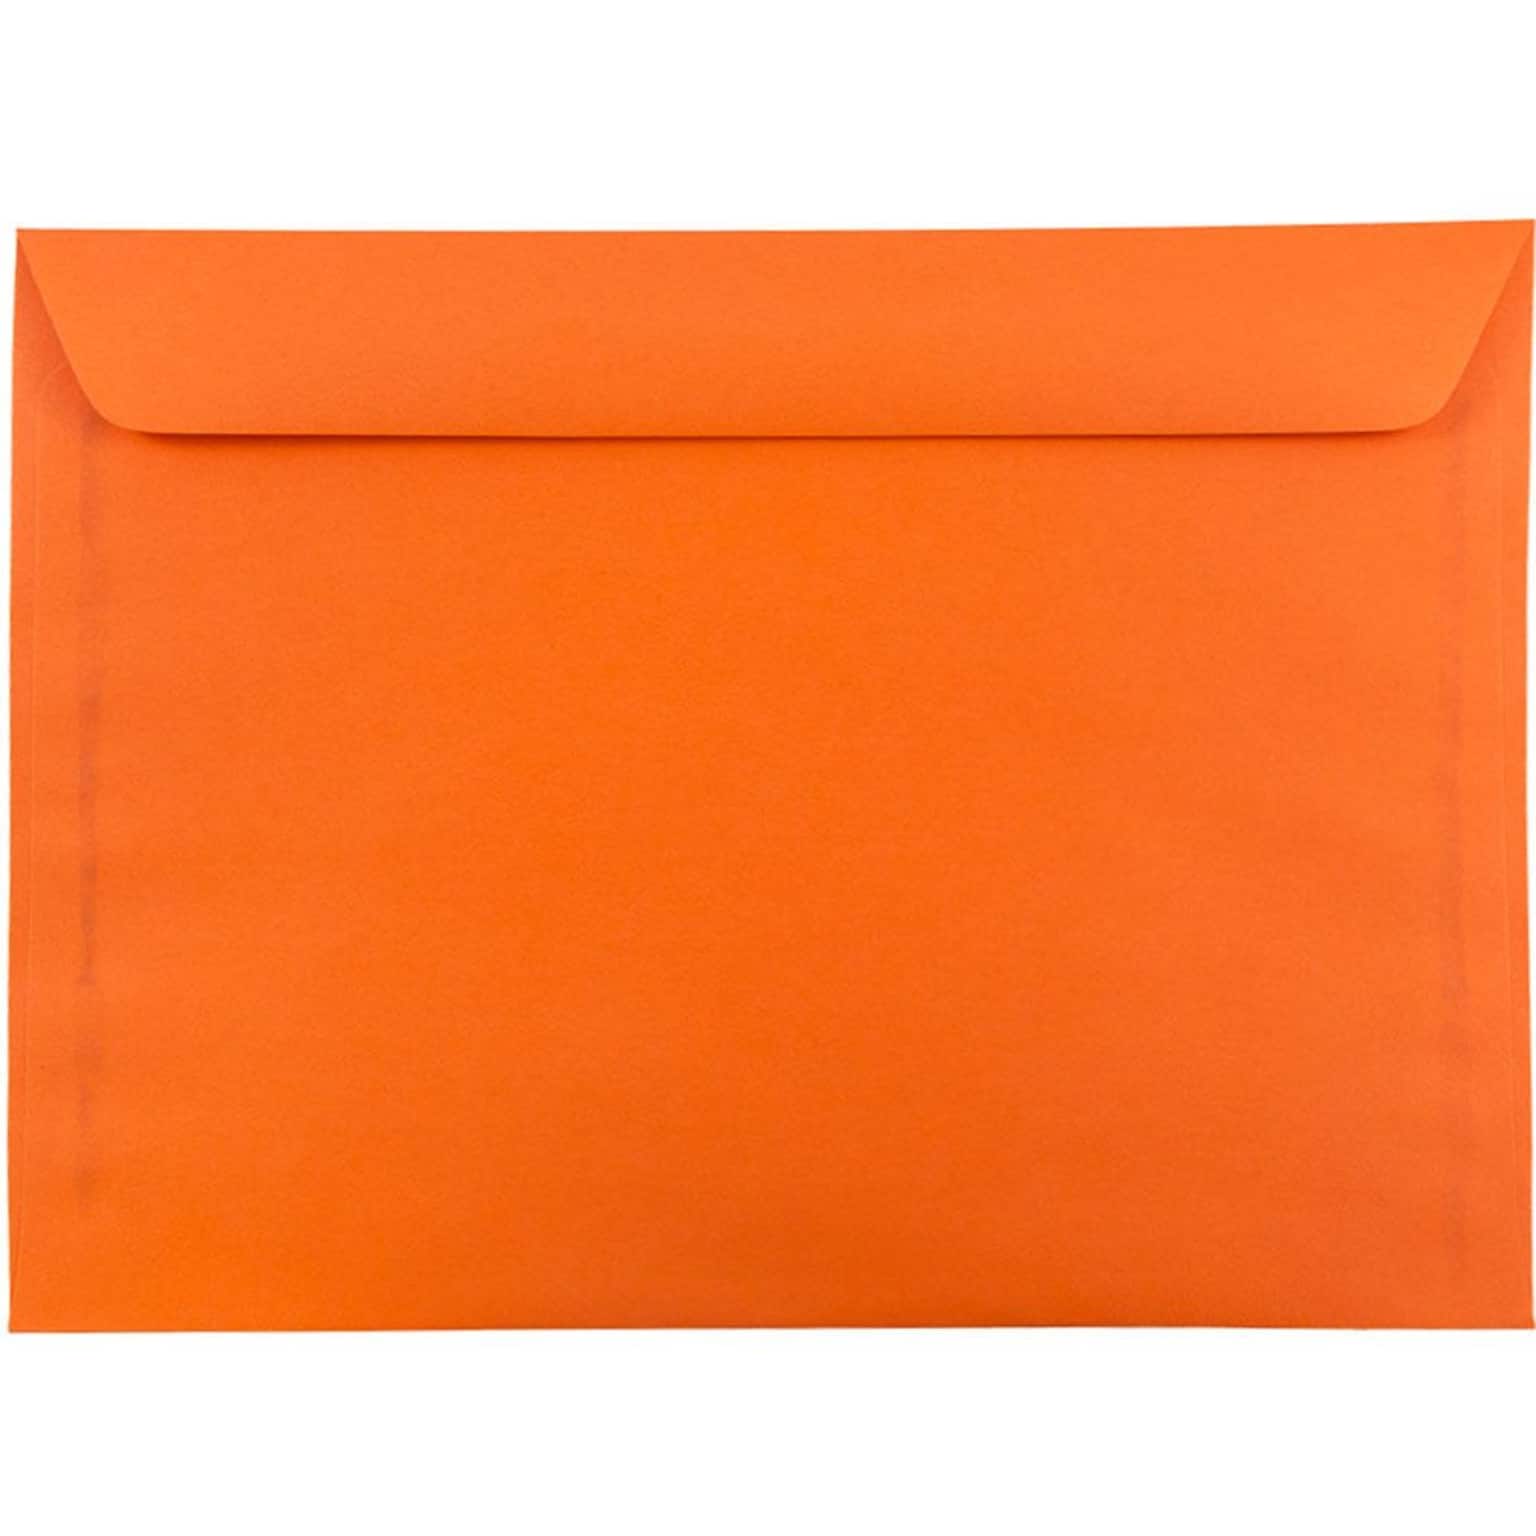 JAM Paper® 9 x 12 Booklet Catalog Colored Envelopes, Orange Recycled, Bulk 500/Box (5156772d)